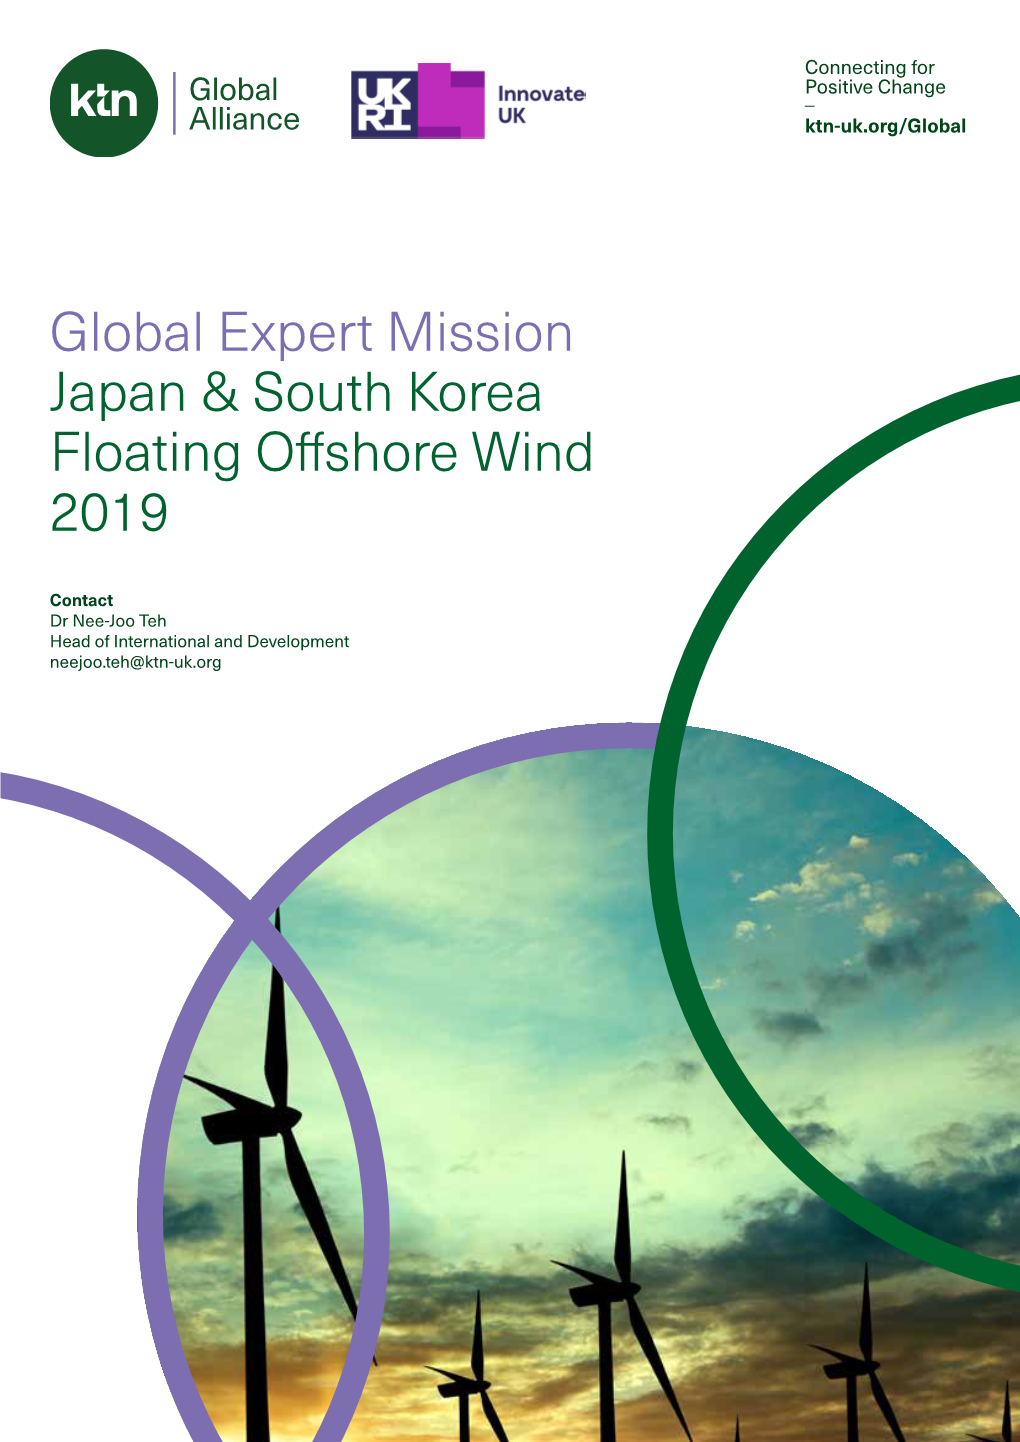 Global Expert Mission Japan & South Korea Floating Offshore Wind 2019